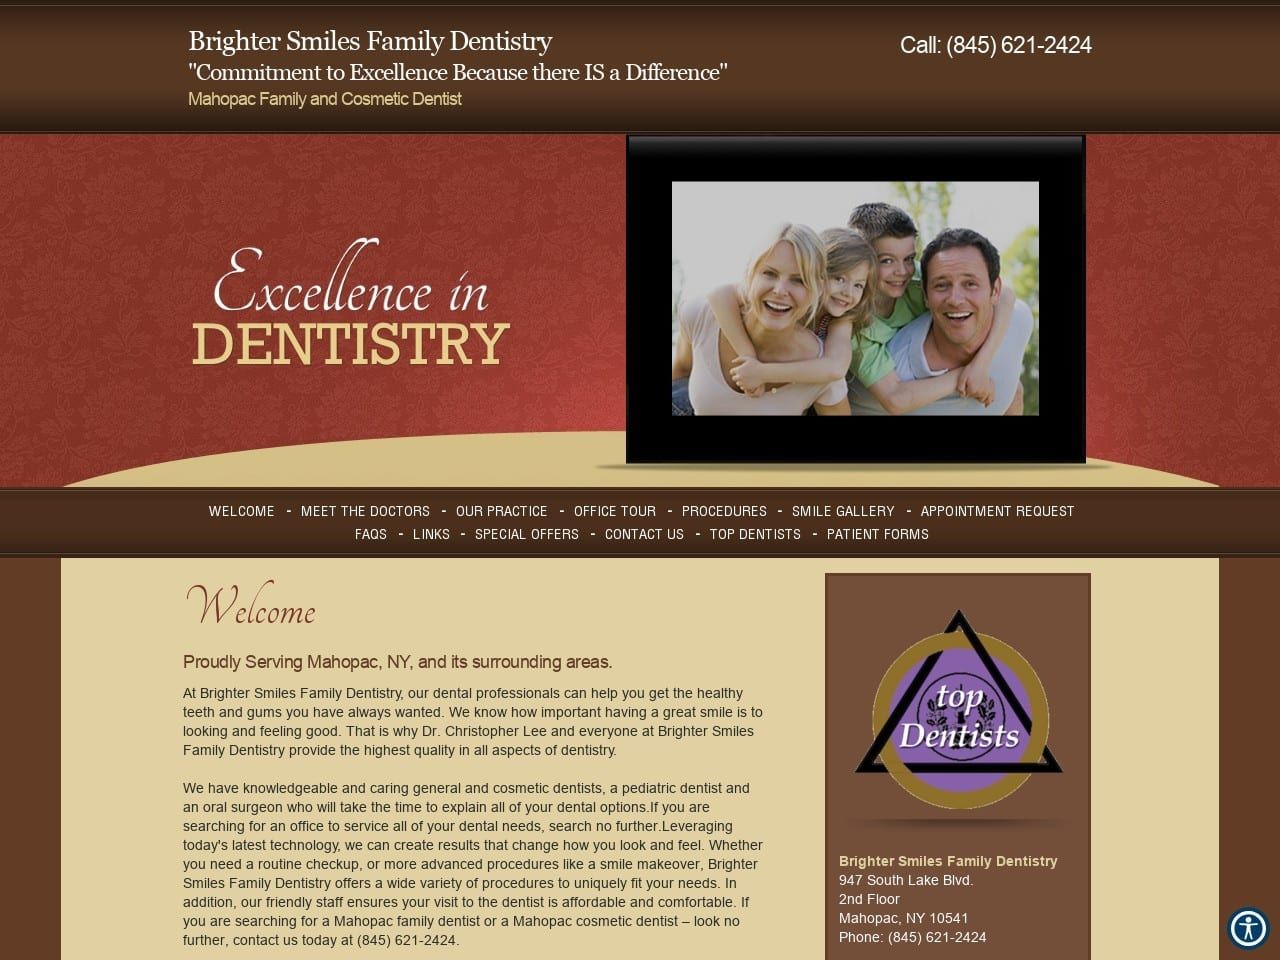 Brighter Smiles Family Dentistry Lee Christopher D Website Screenshot from brightersmilesdentistry.com